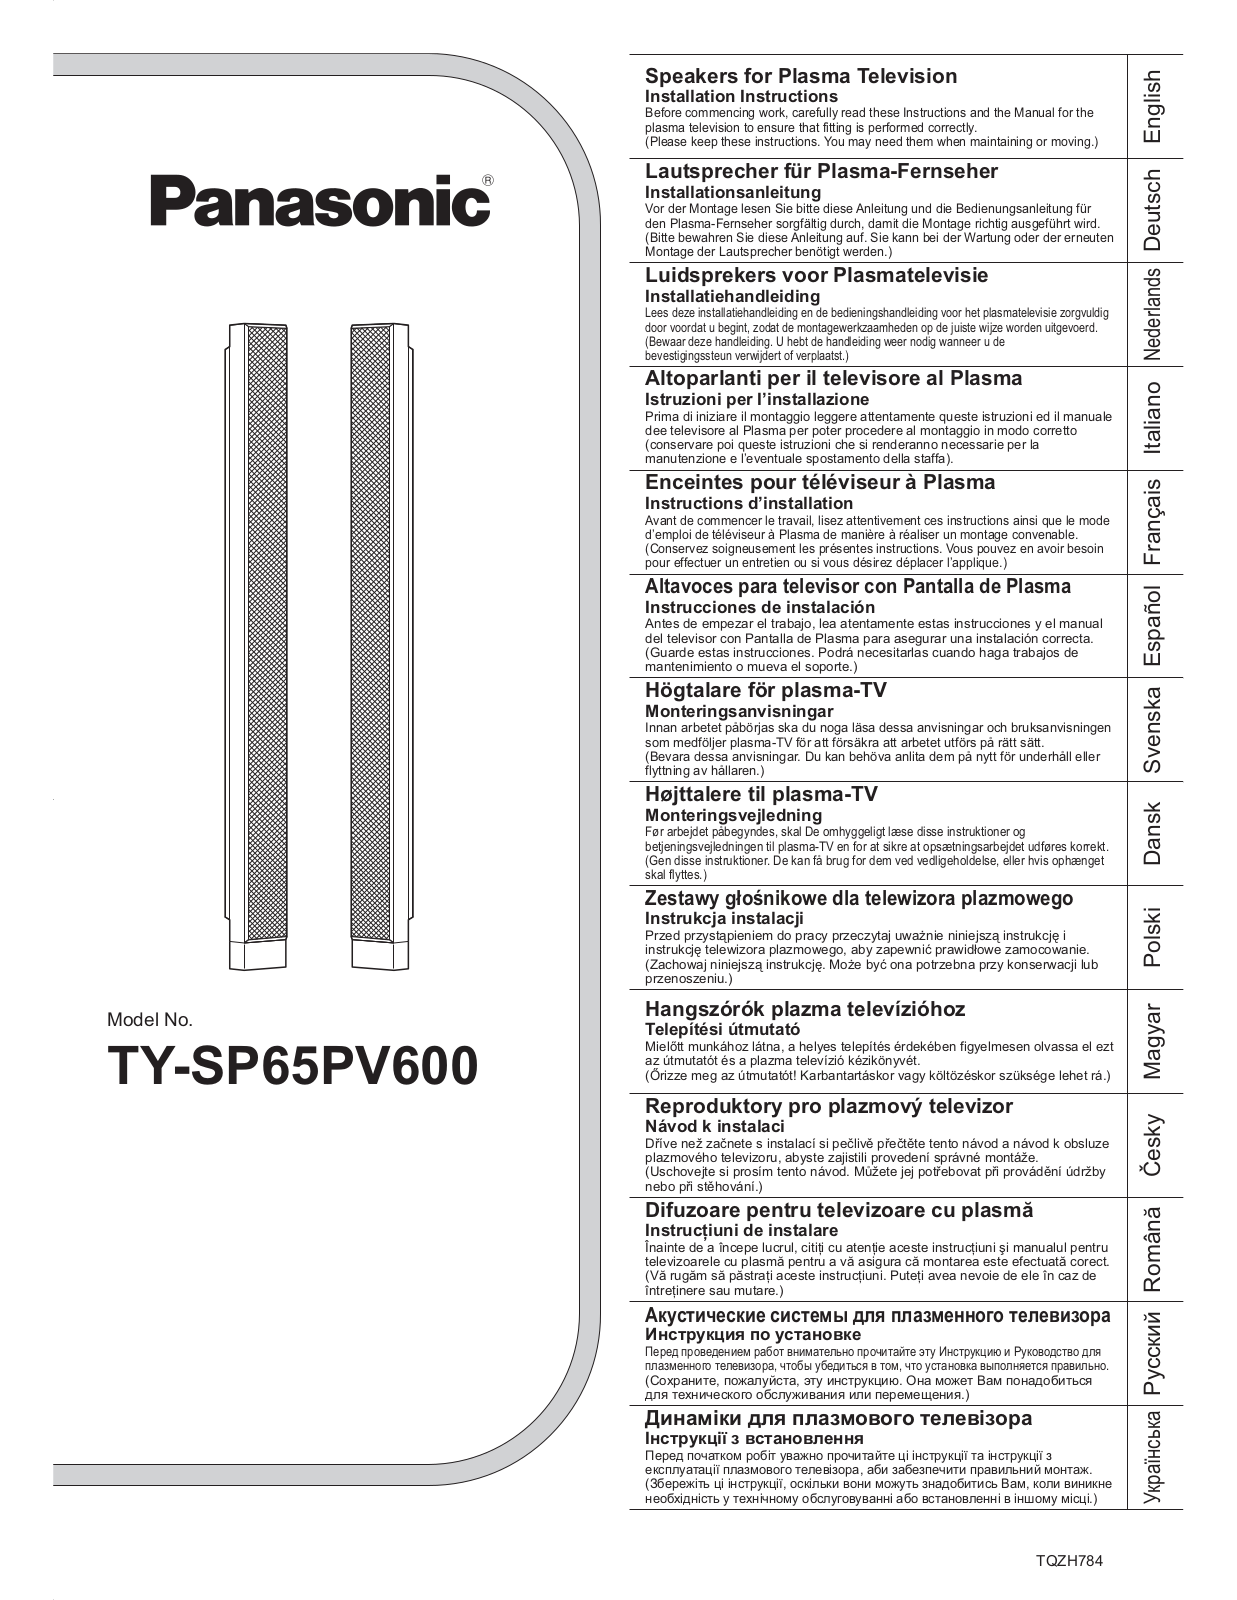 Panasonic tys65pv600 Operation Manual